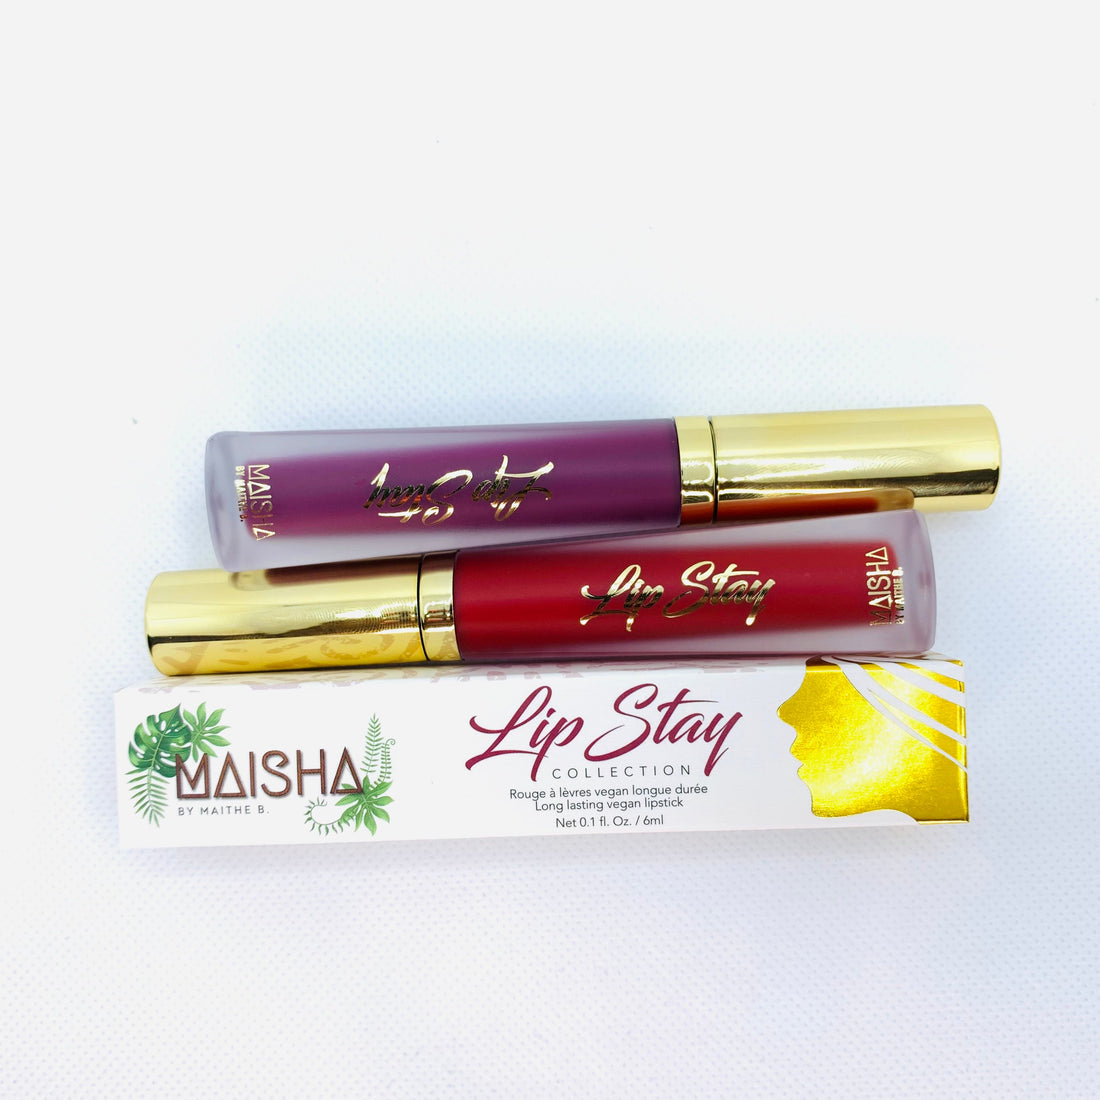 LipStay Lipstick - Maisha Beauty Products